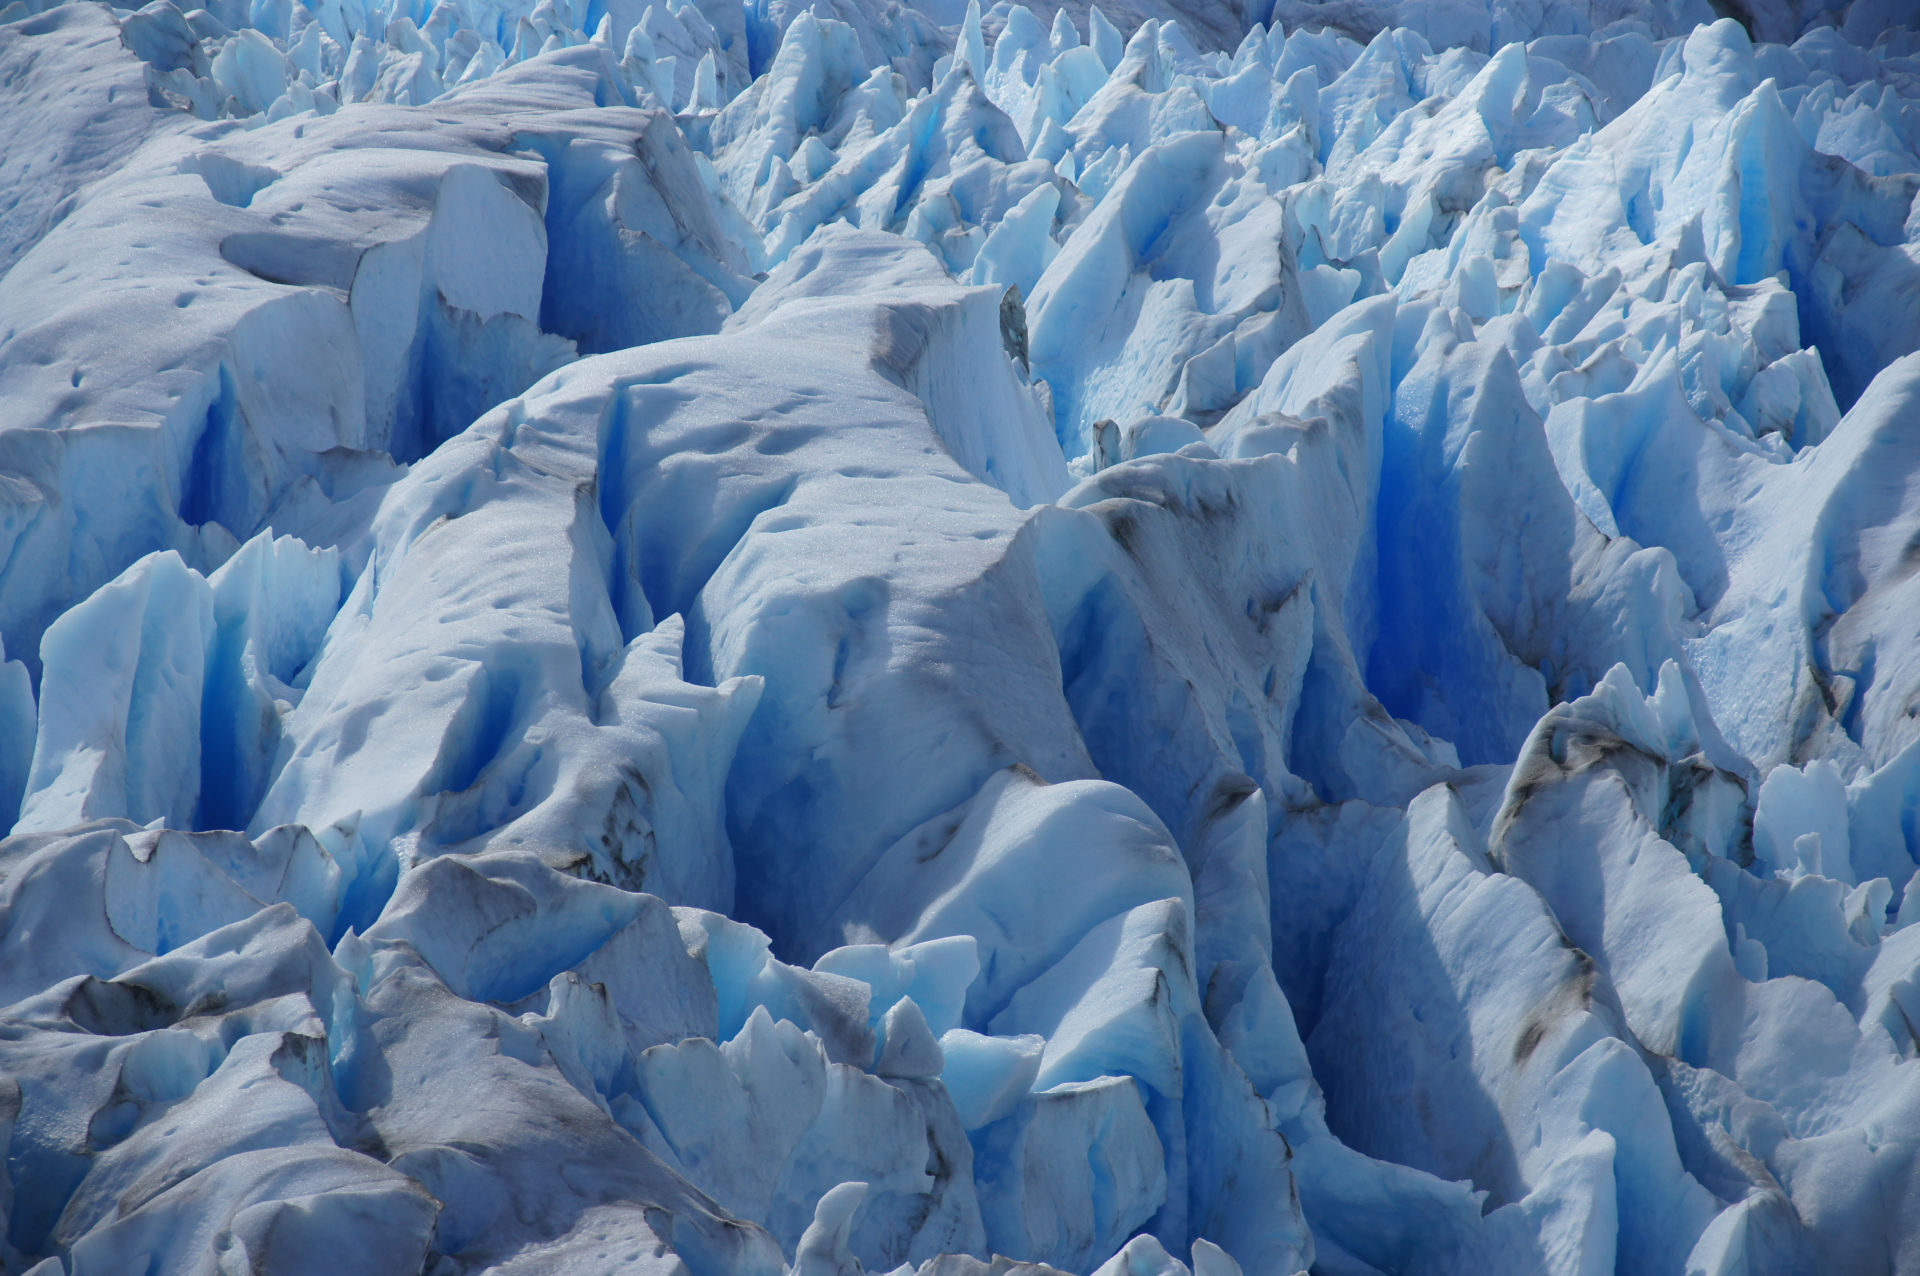 Das blaue Eis des Glacier Grey. (Bild: Matthias Braun)